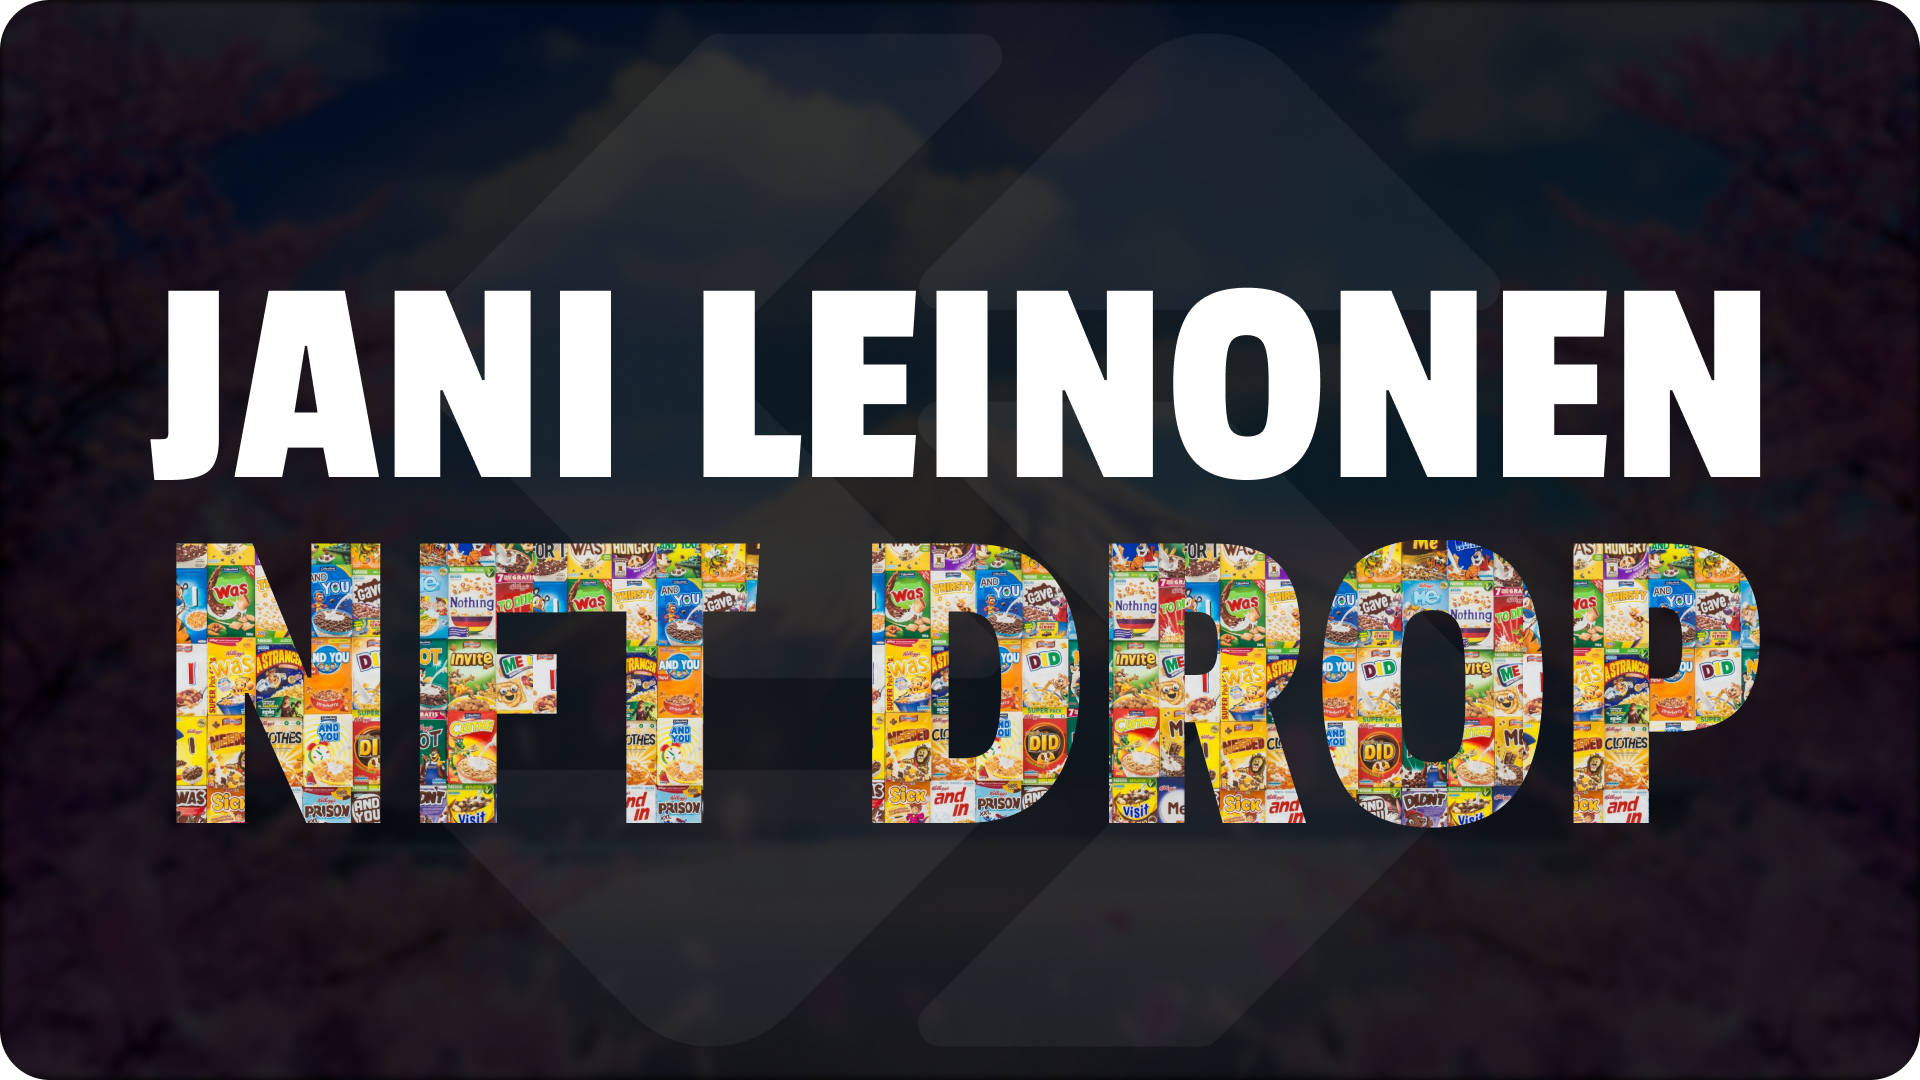 Jani Leinonen’s first NFT drop